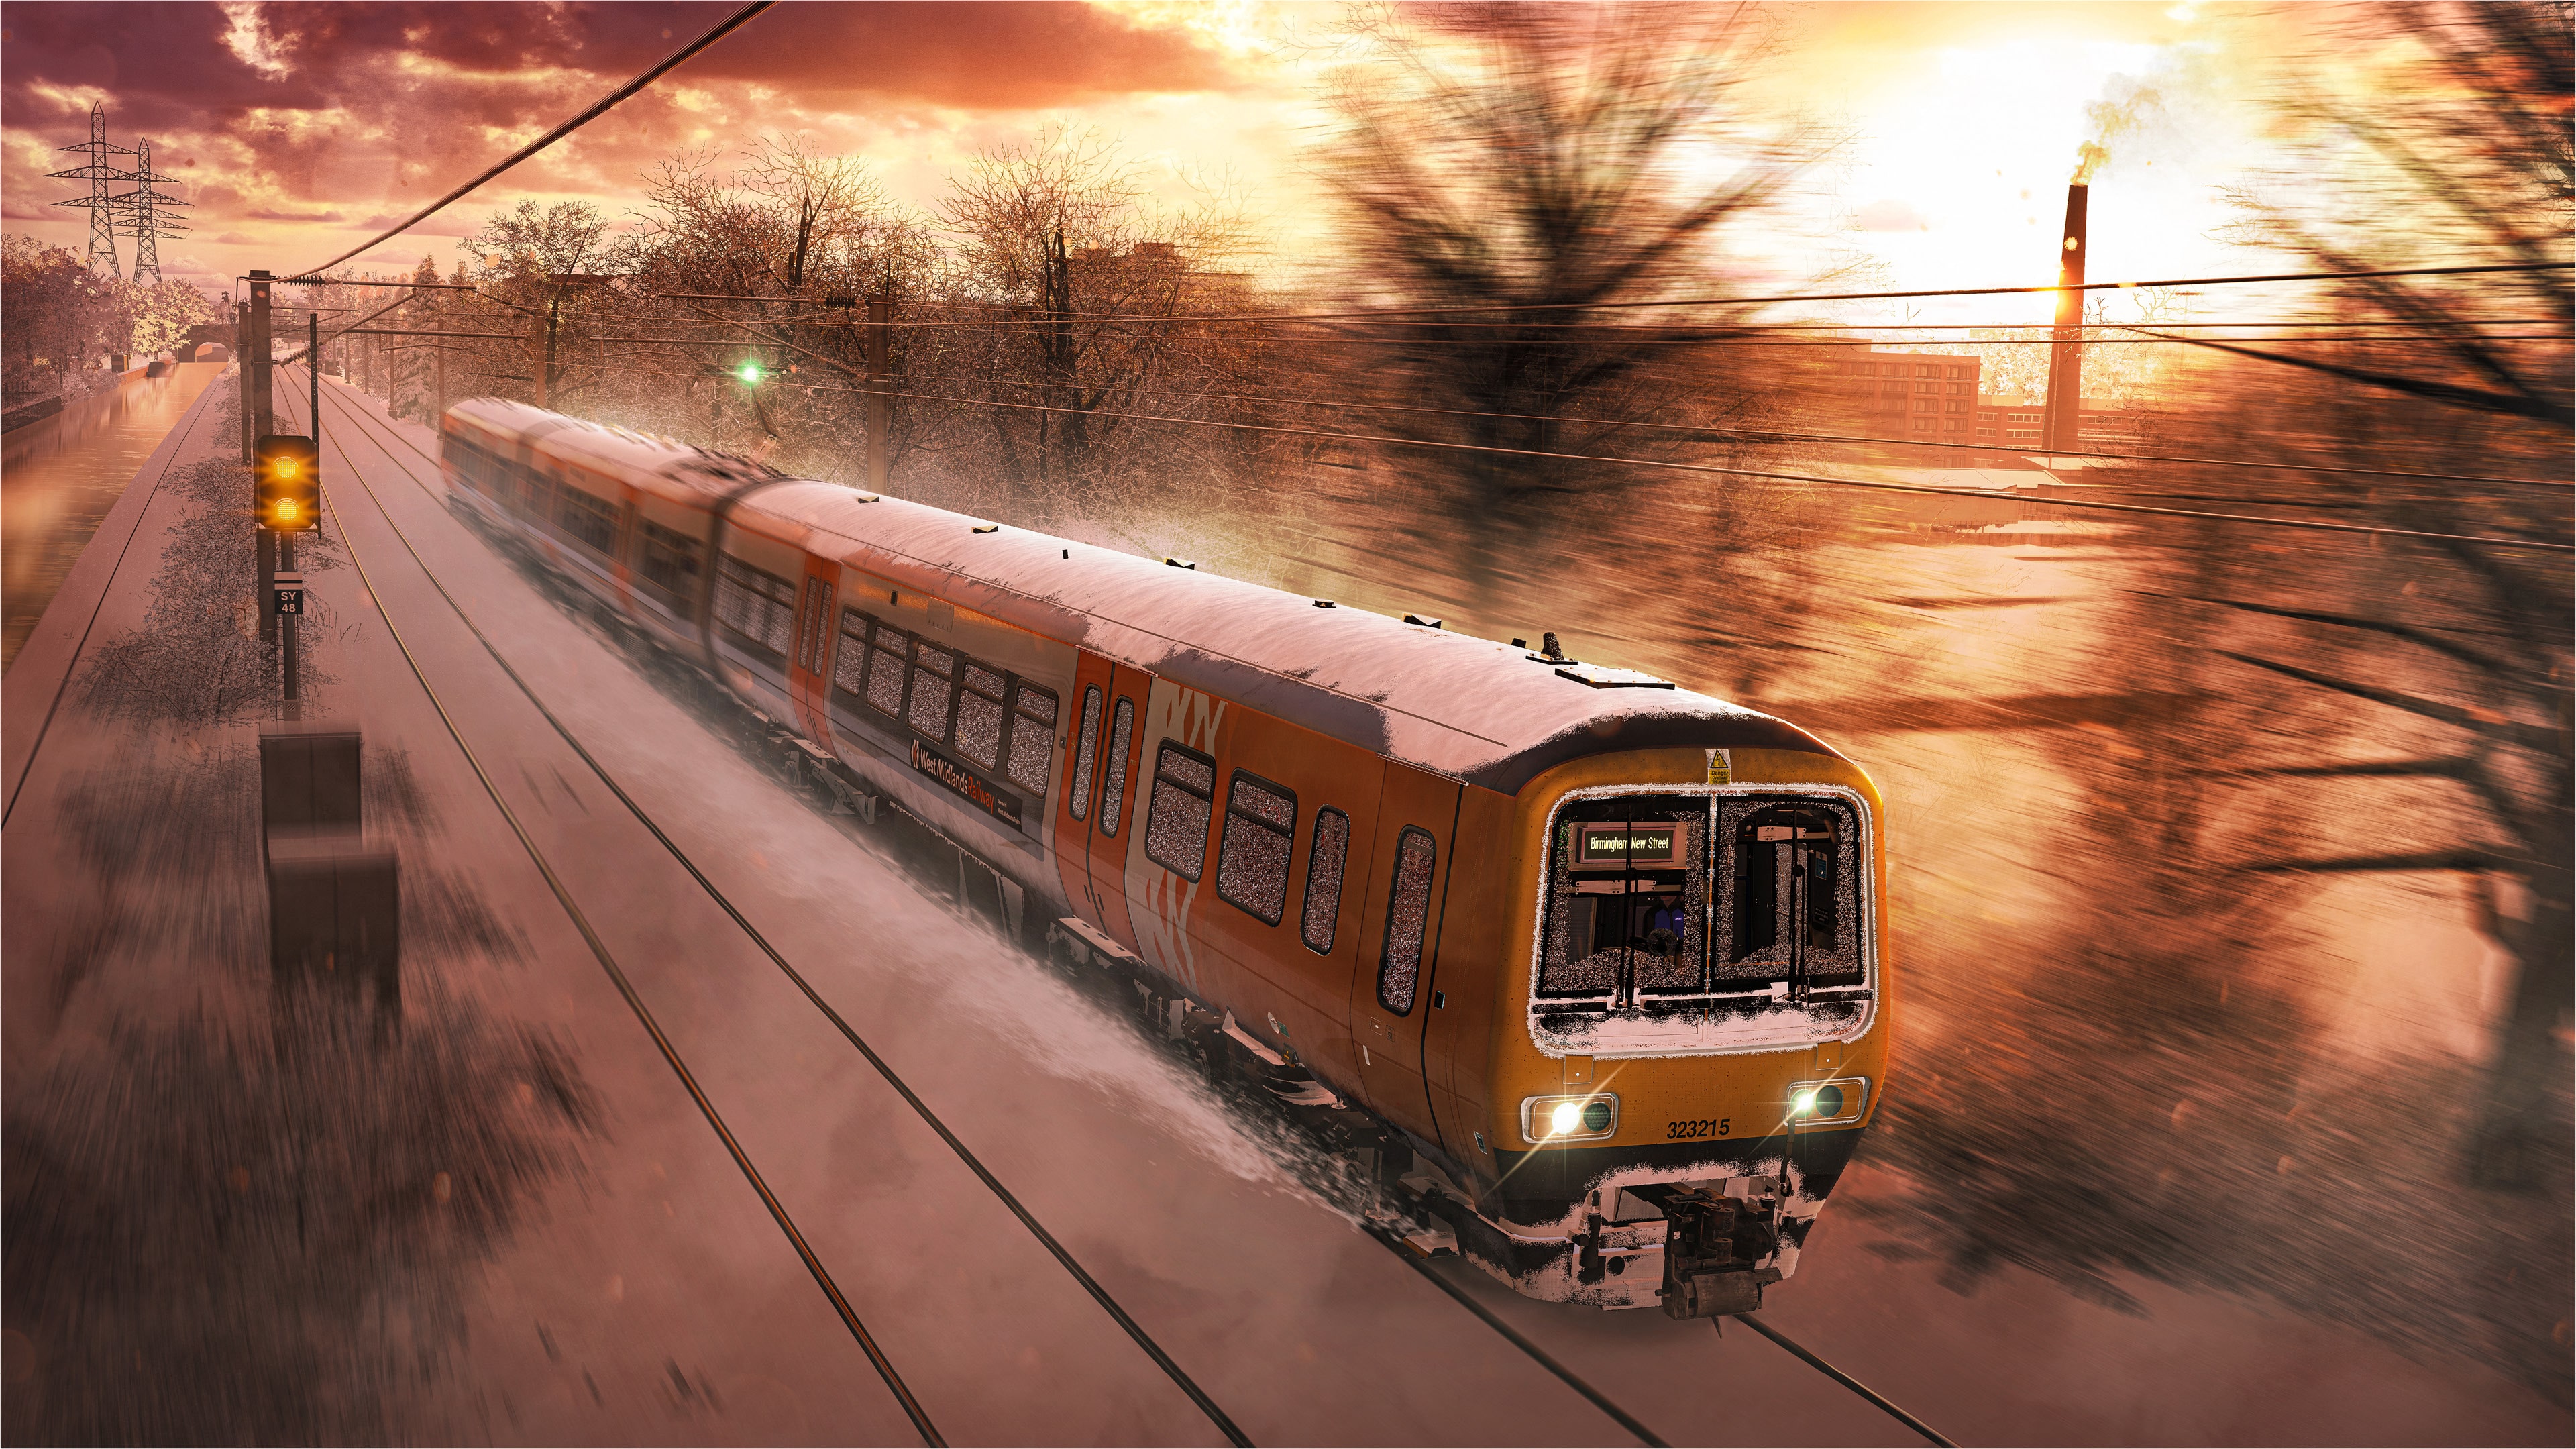 Train Sim World® 4 Compatible: Birmingham Cross-City Line: Lichfield - Bromsgrove & Redditch